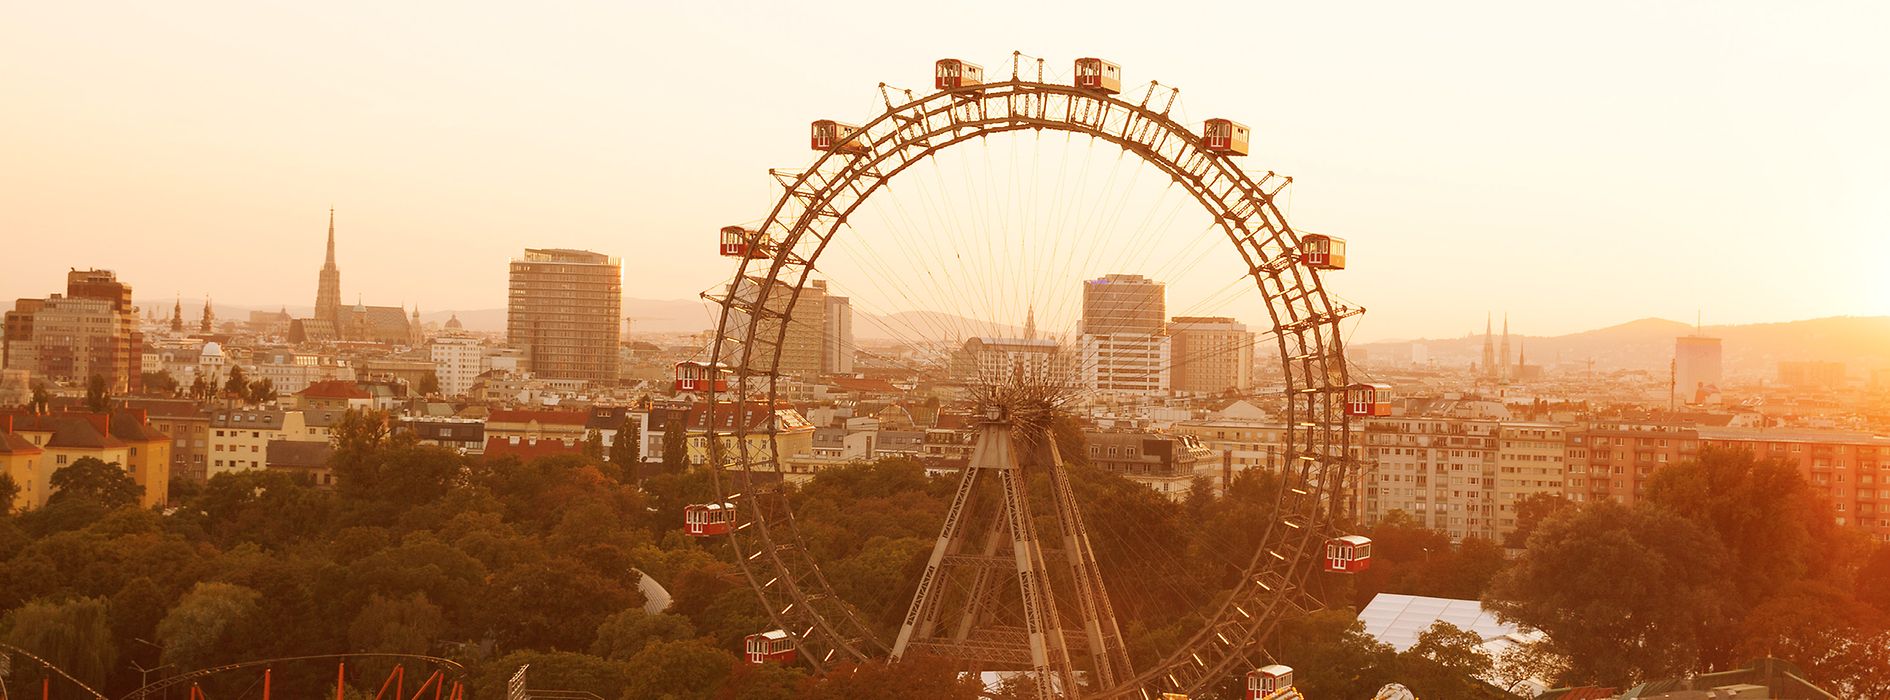 The Giant Ferris Wheel